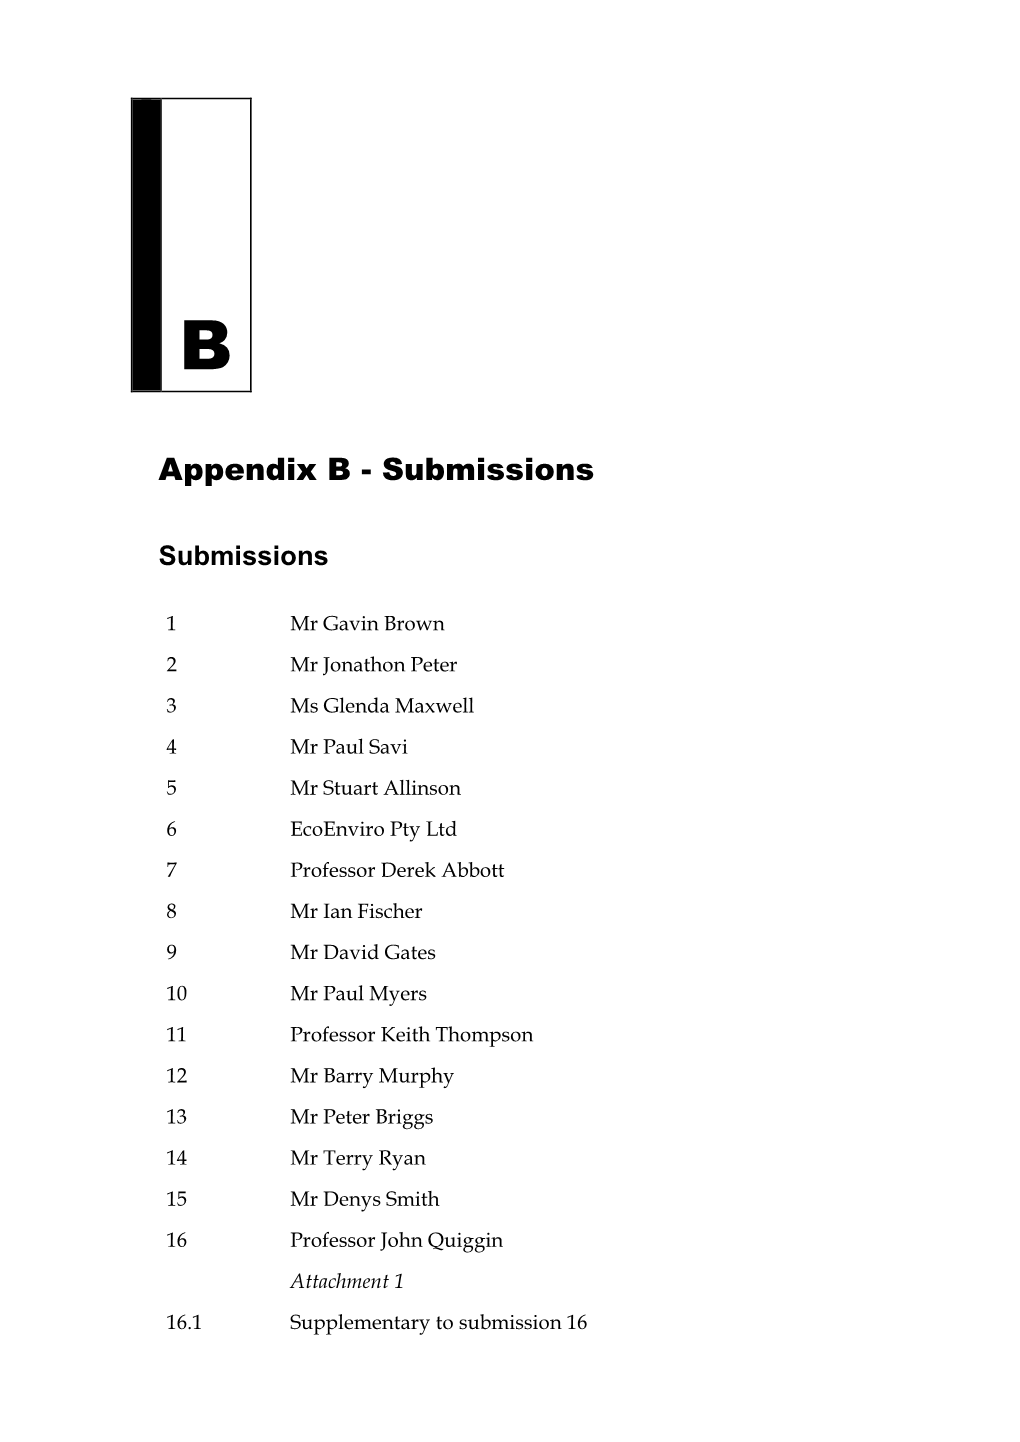 Appendix B: Submissions